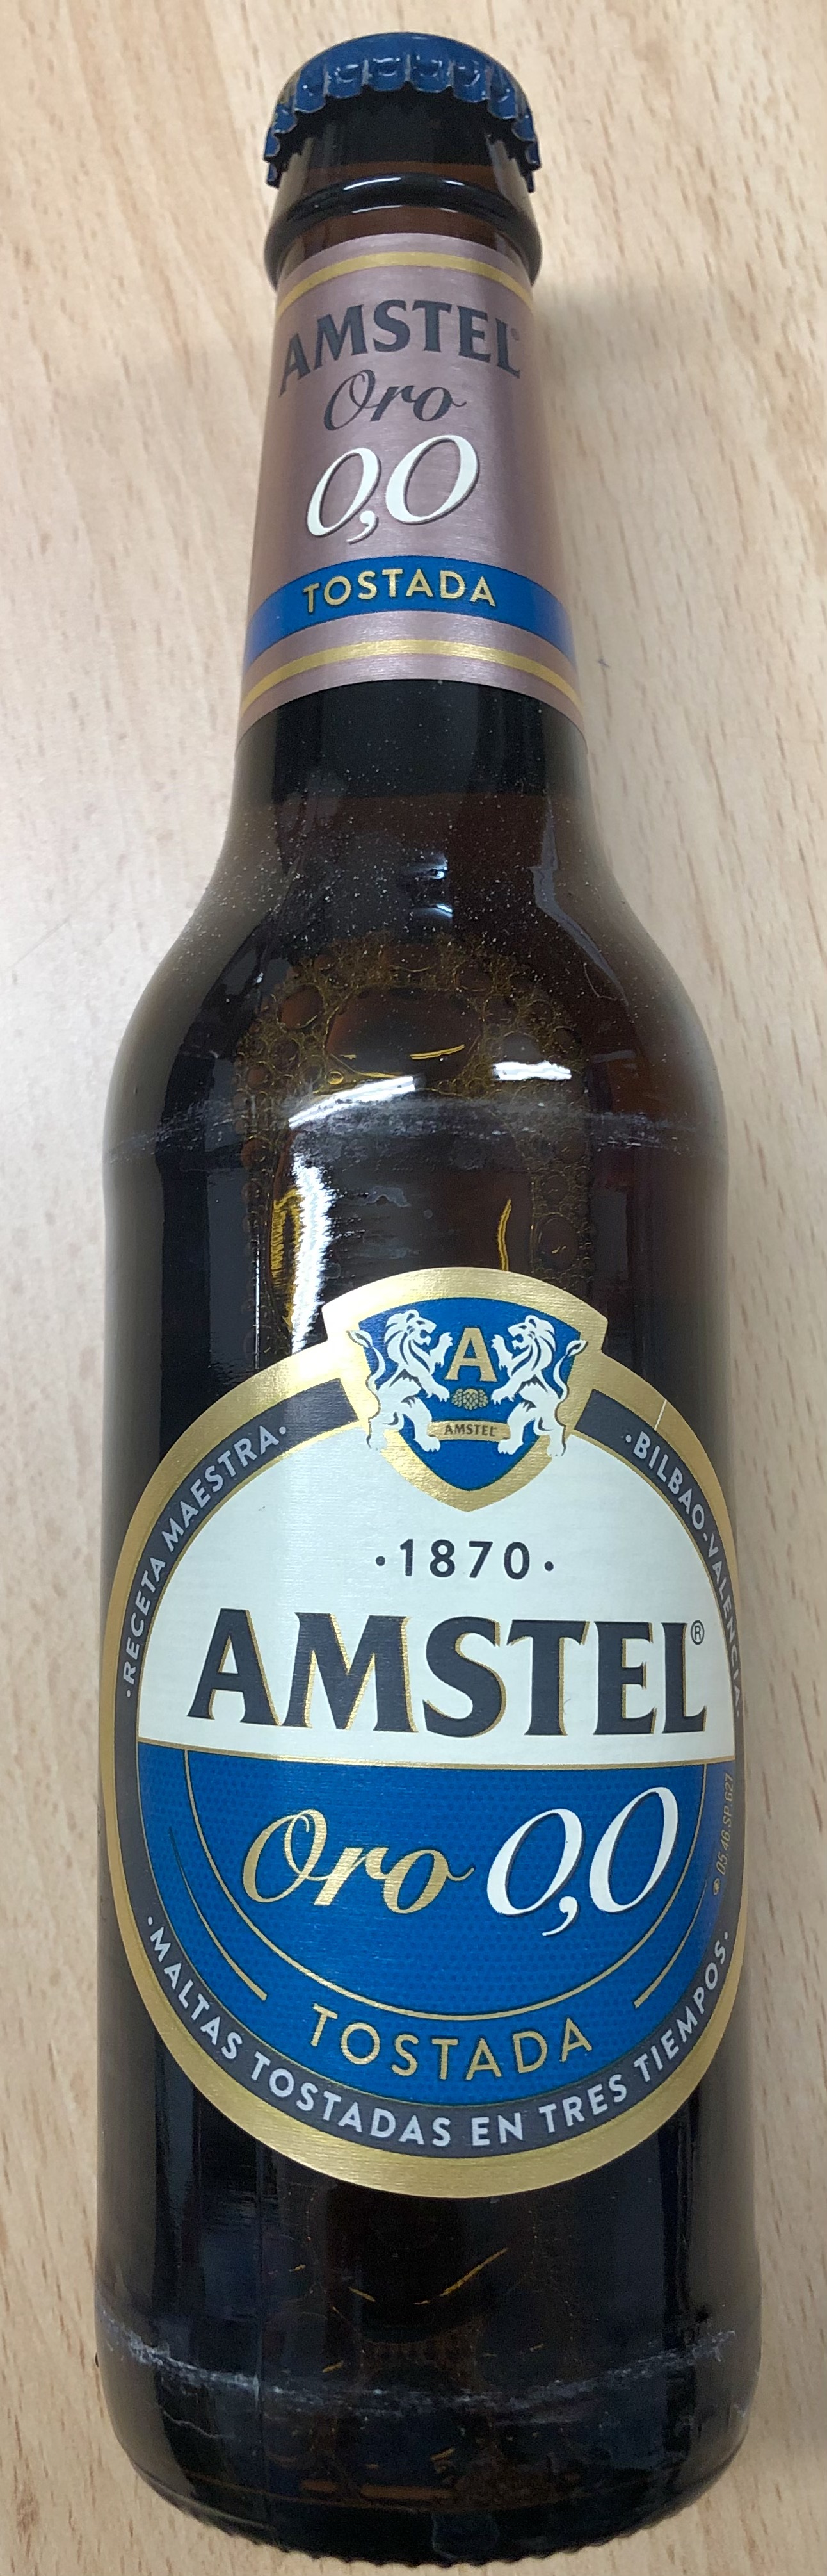 Amstel gold 0,0 toast